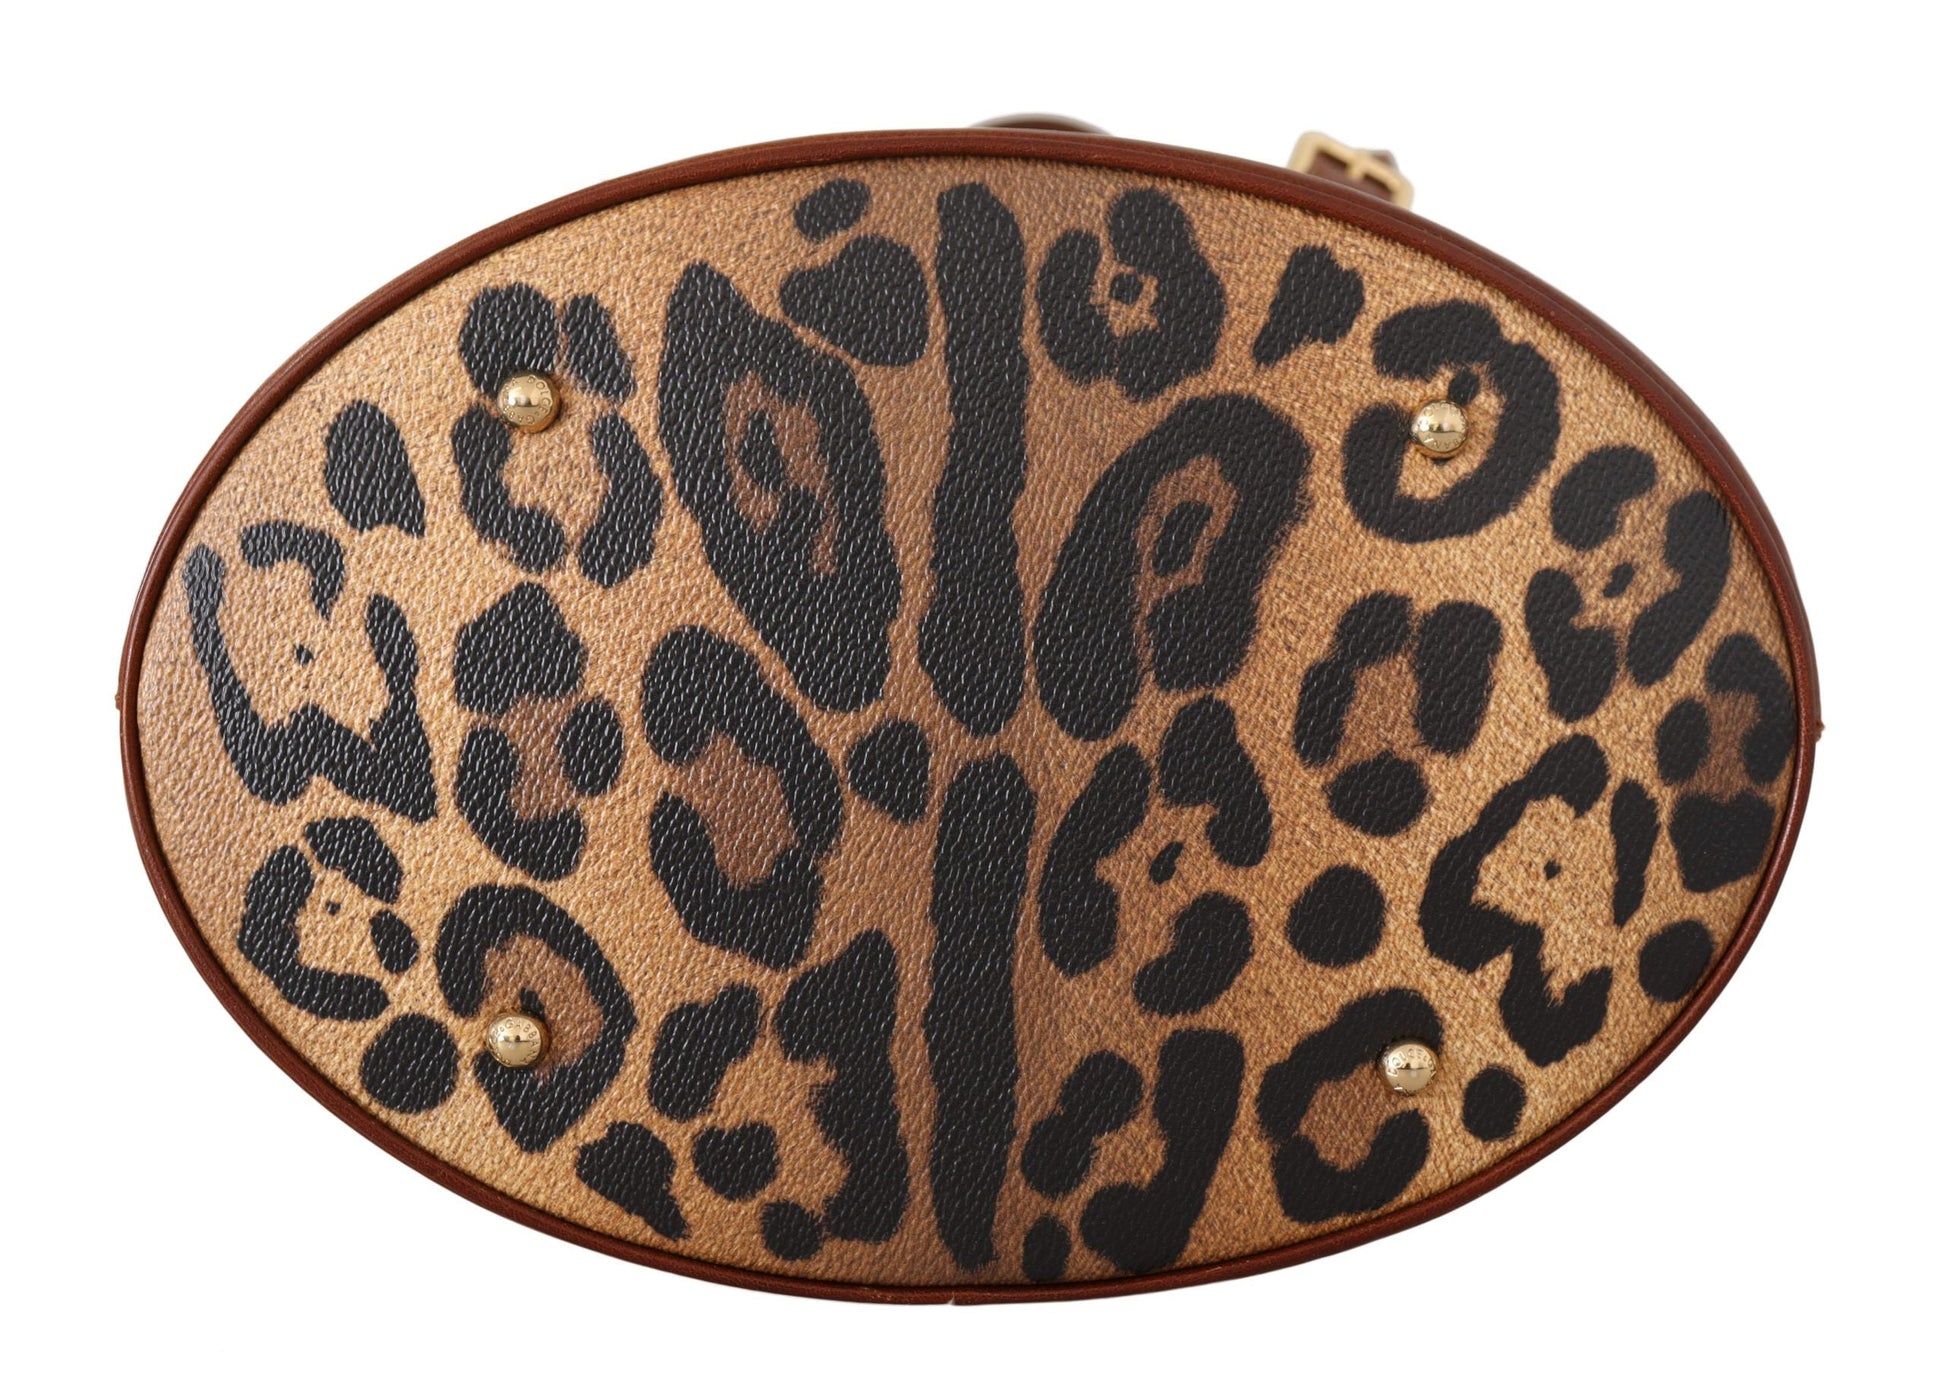 Fashionsarah.com Fashionsarah.com Dolce & Gabbana Leopard Handbag